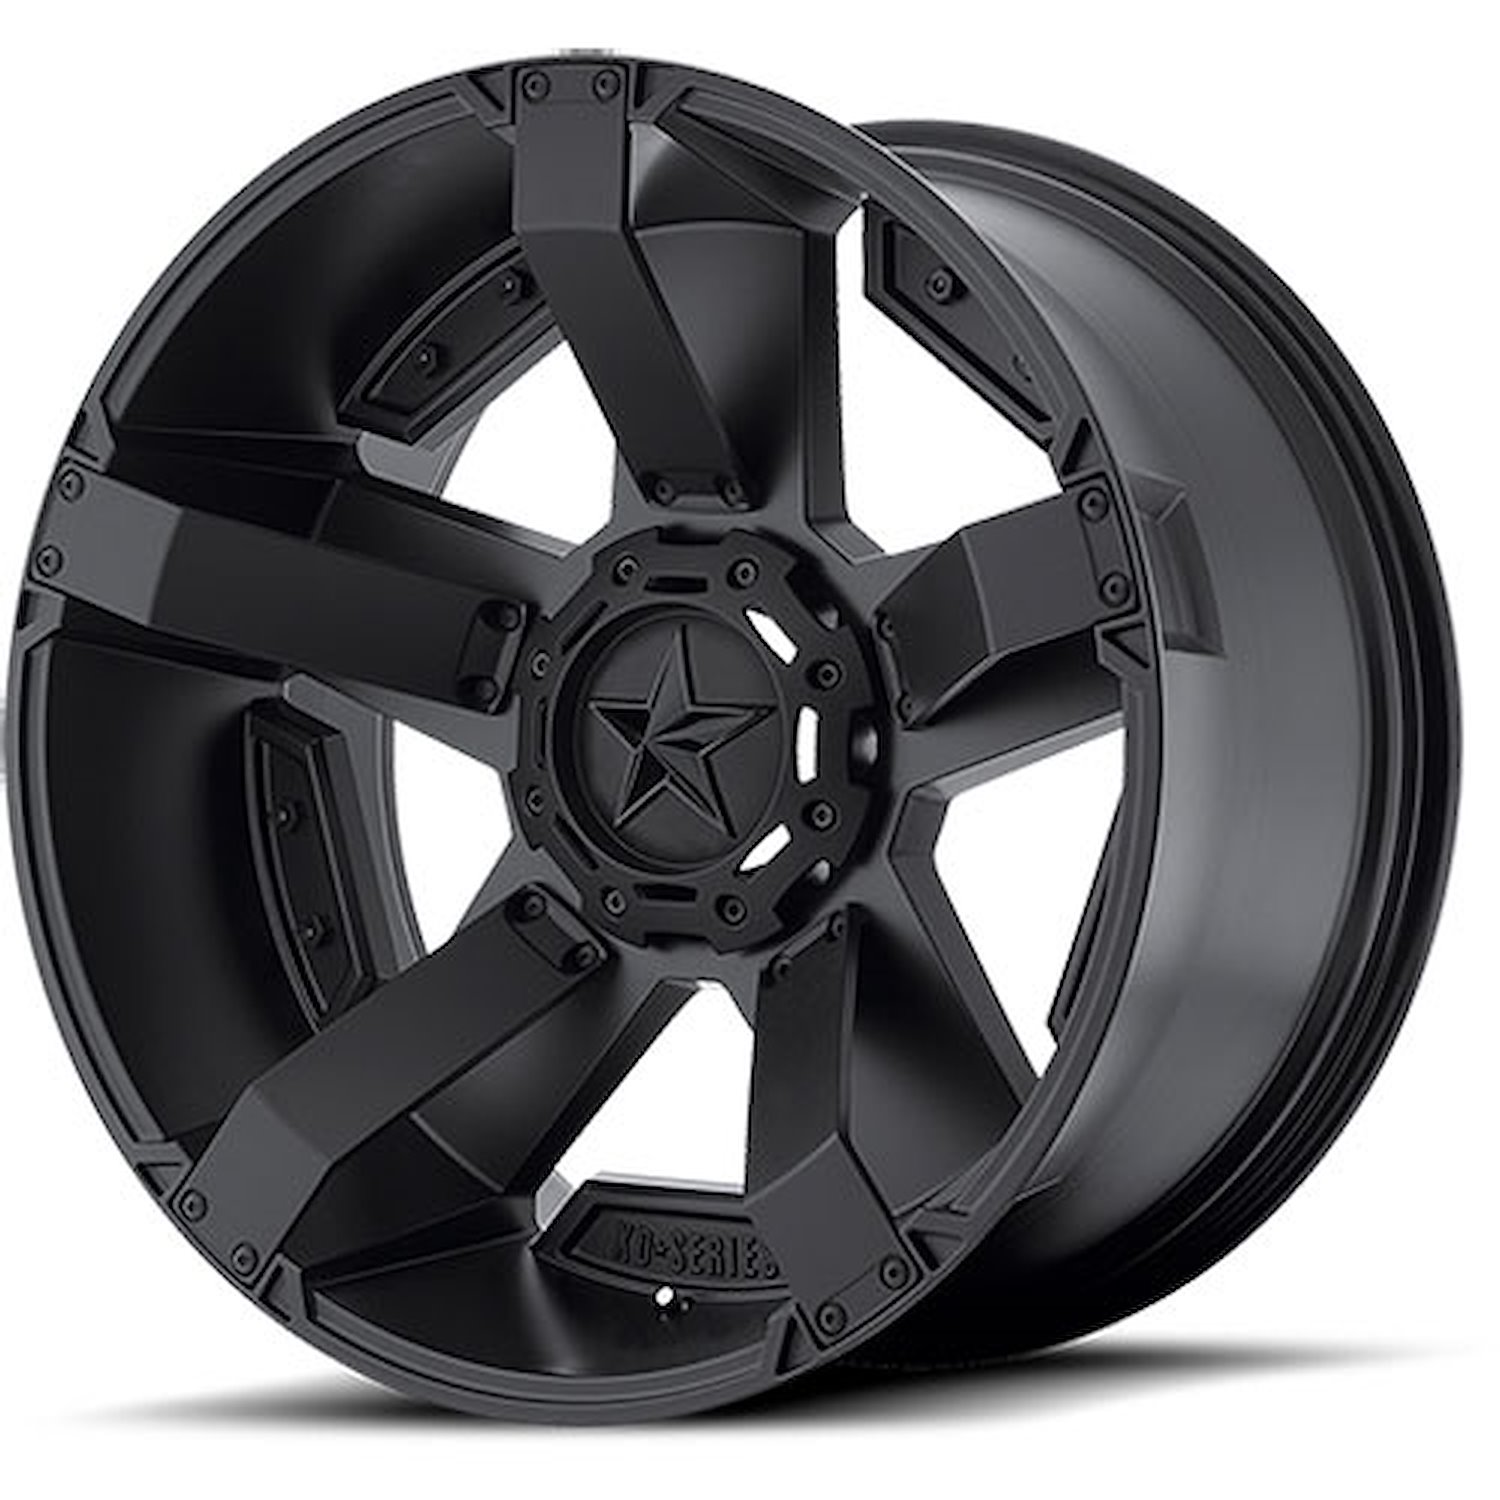 XD811 Series RS2 Rockstar Wheel Size: 17" x 9"